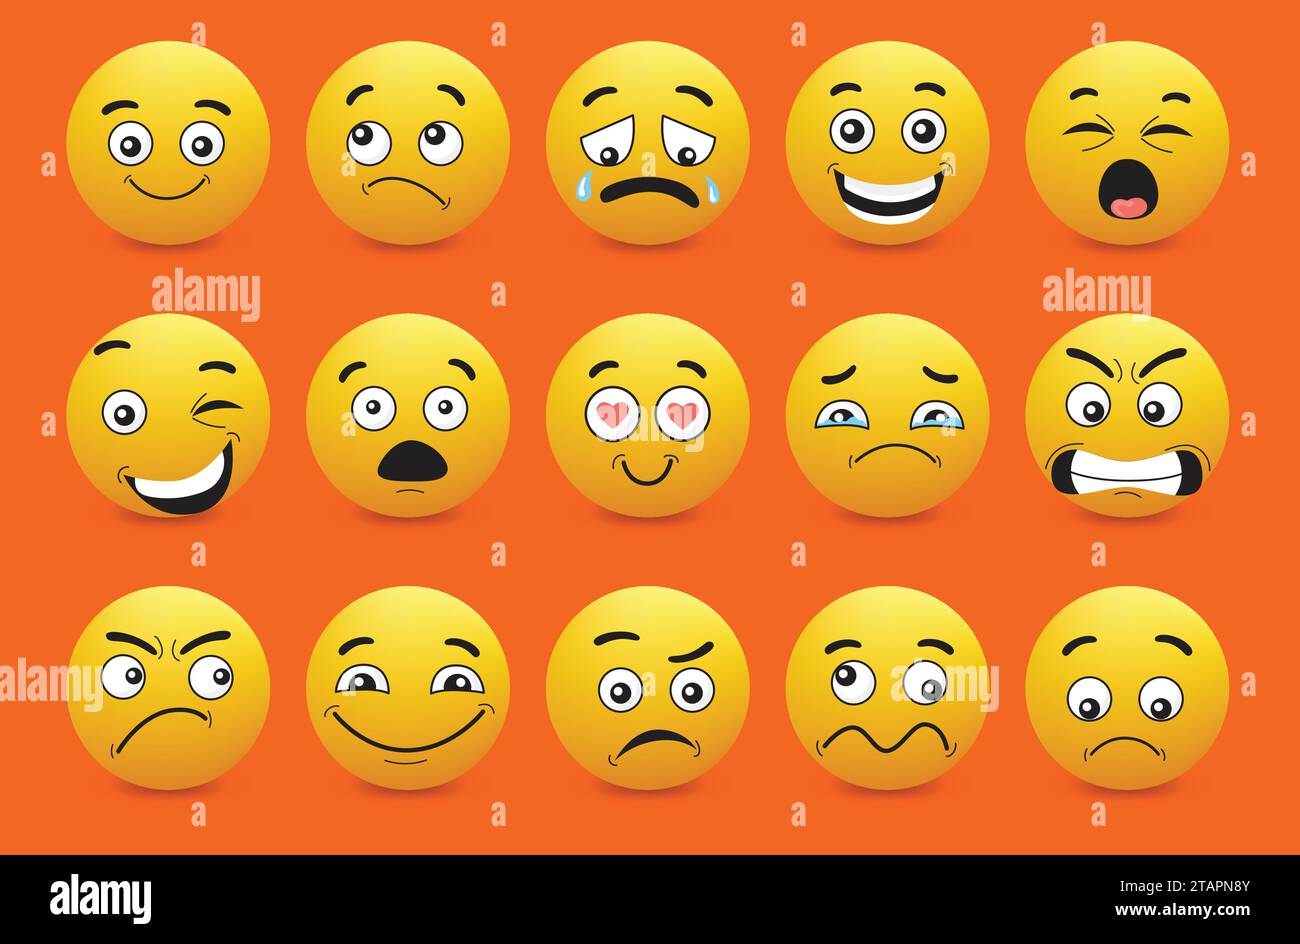 Big set of yellow emoji. iOS emoji, emoticons. WhatsApp emoji. Funny emoticons faces with facial expressions. Stock Vector